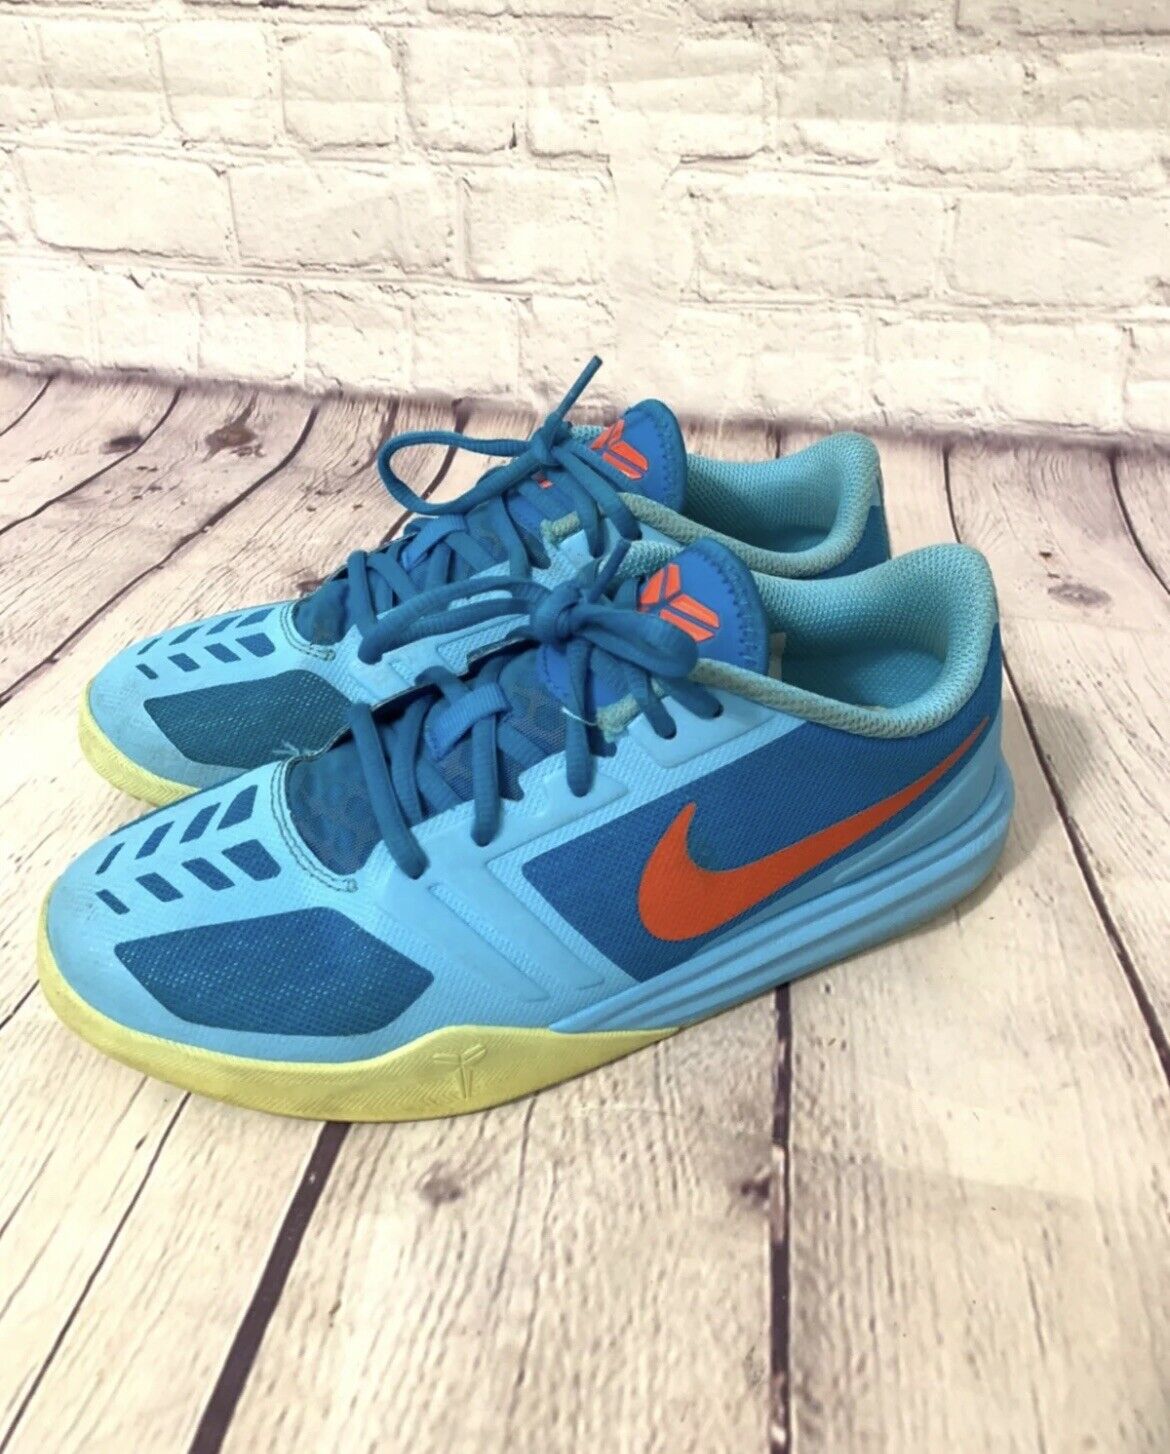 Nike Kobe Bryant￼ mentality 705387Youth size 5.5 Sneaker tennis shoes